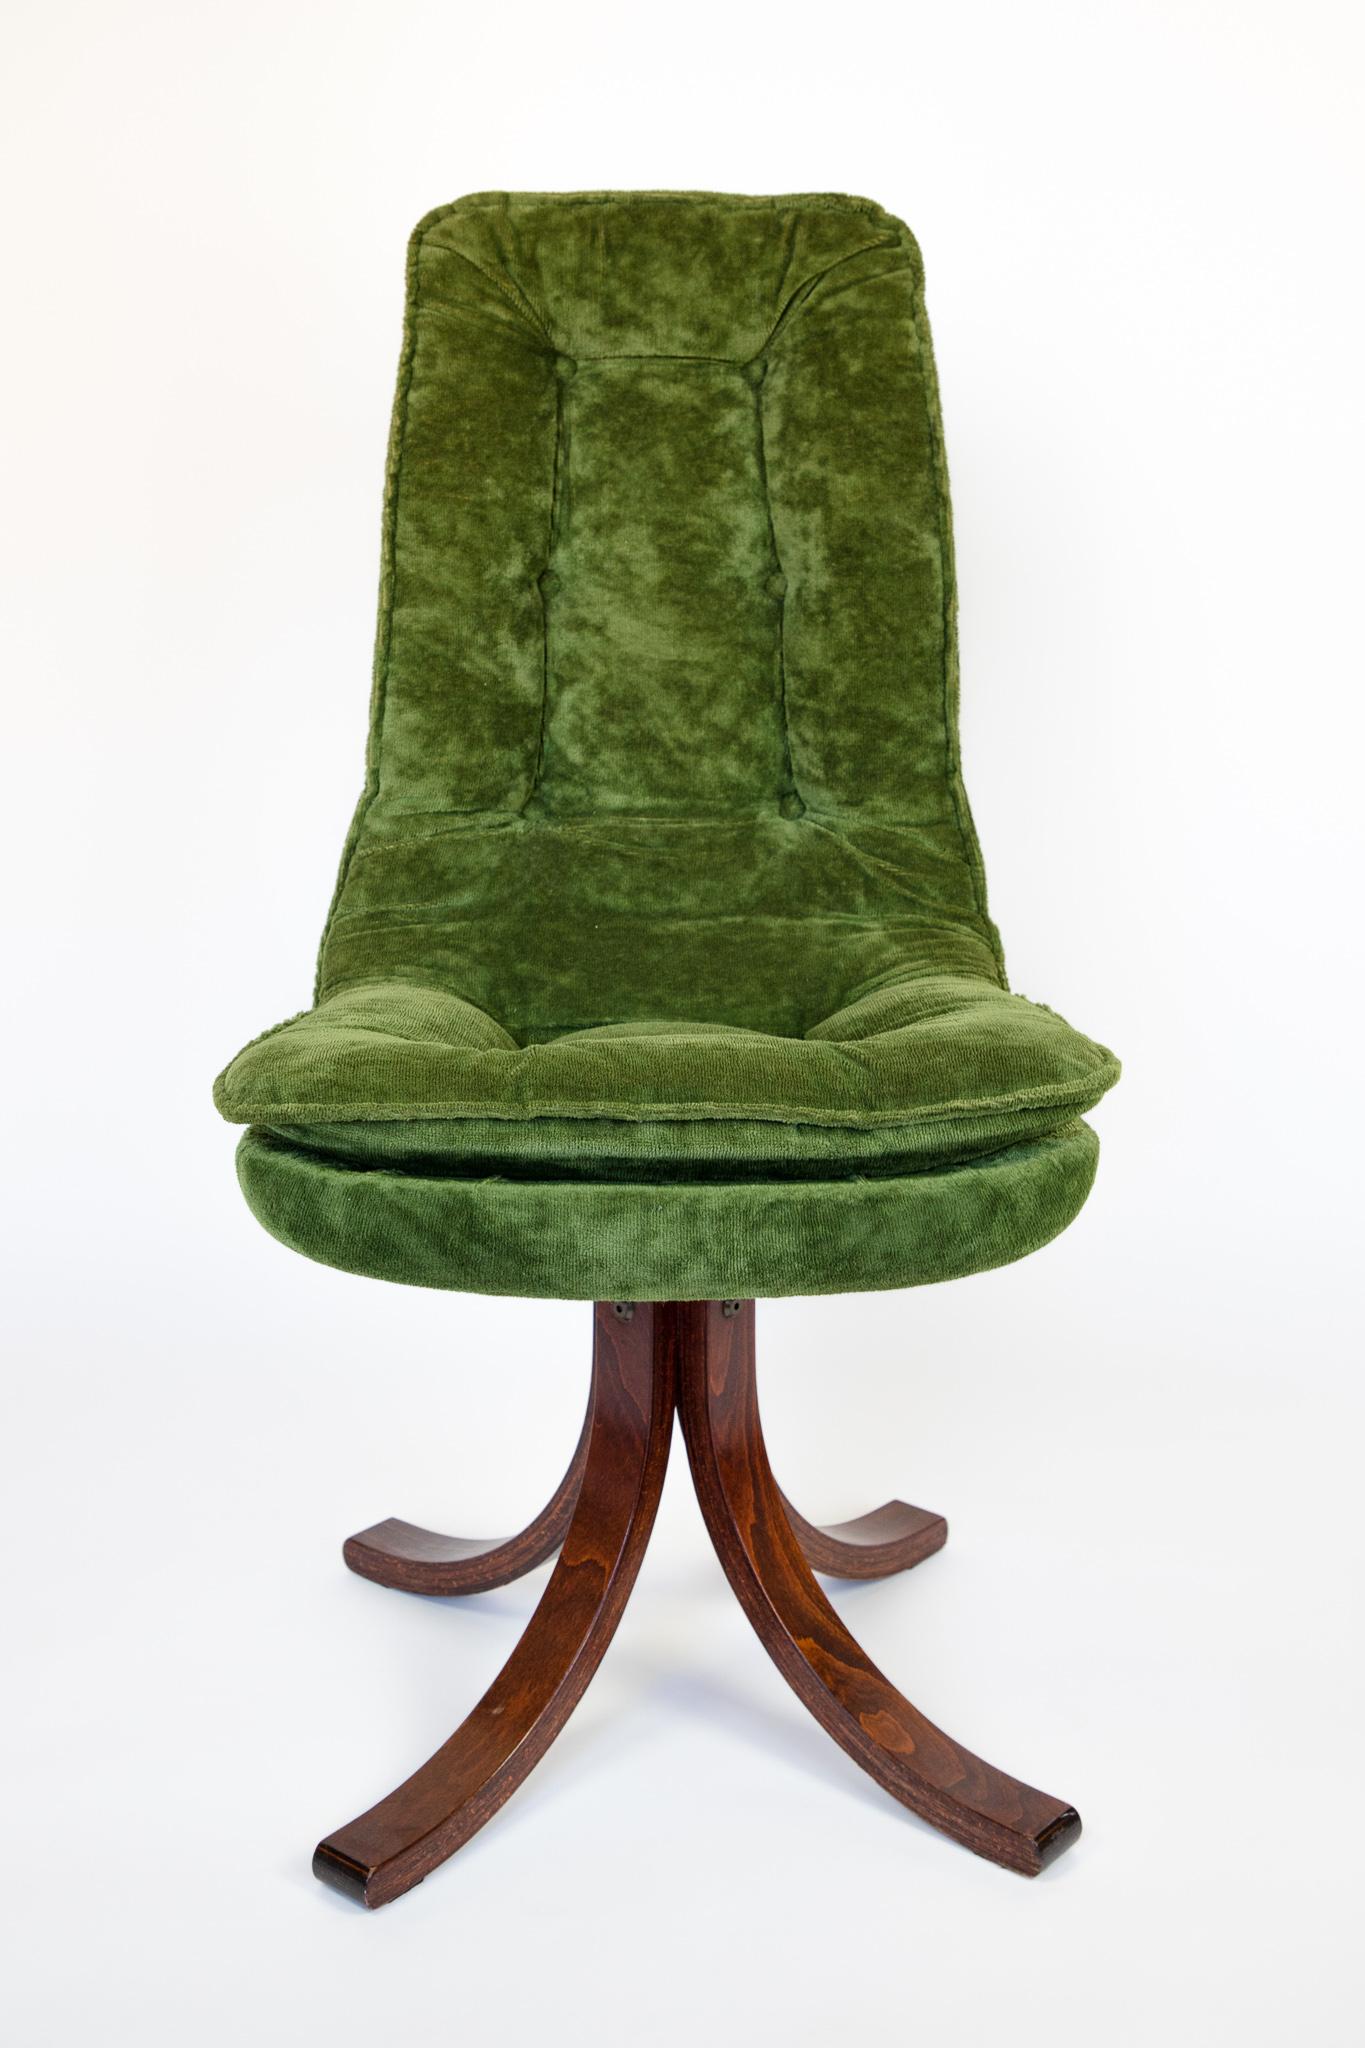 Italian Mid Century Modern Dining Chairs in Green Velvet Upholstery, Italy, 1970s For Sale